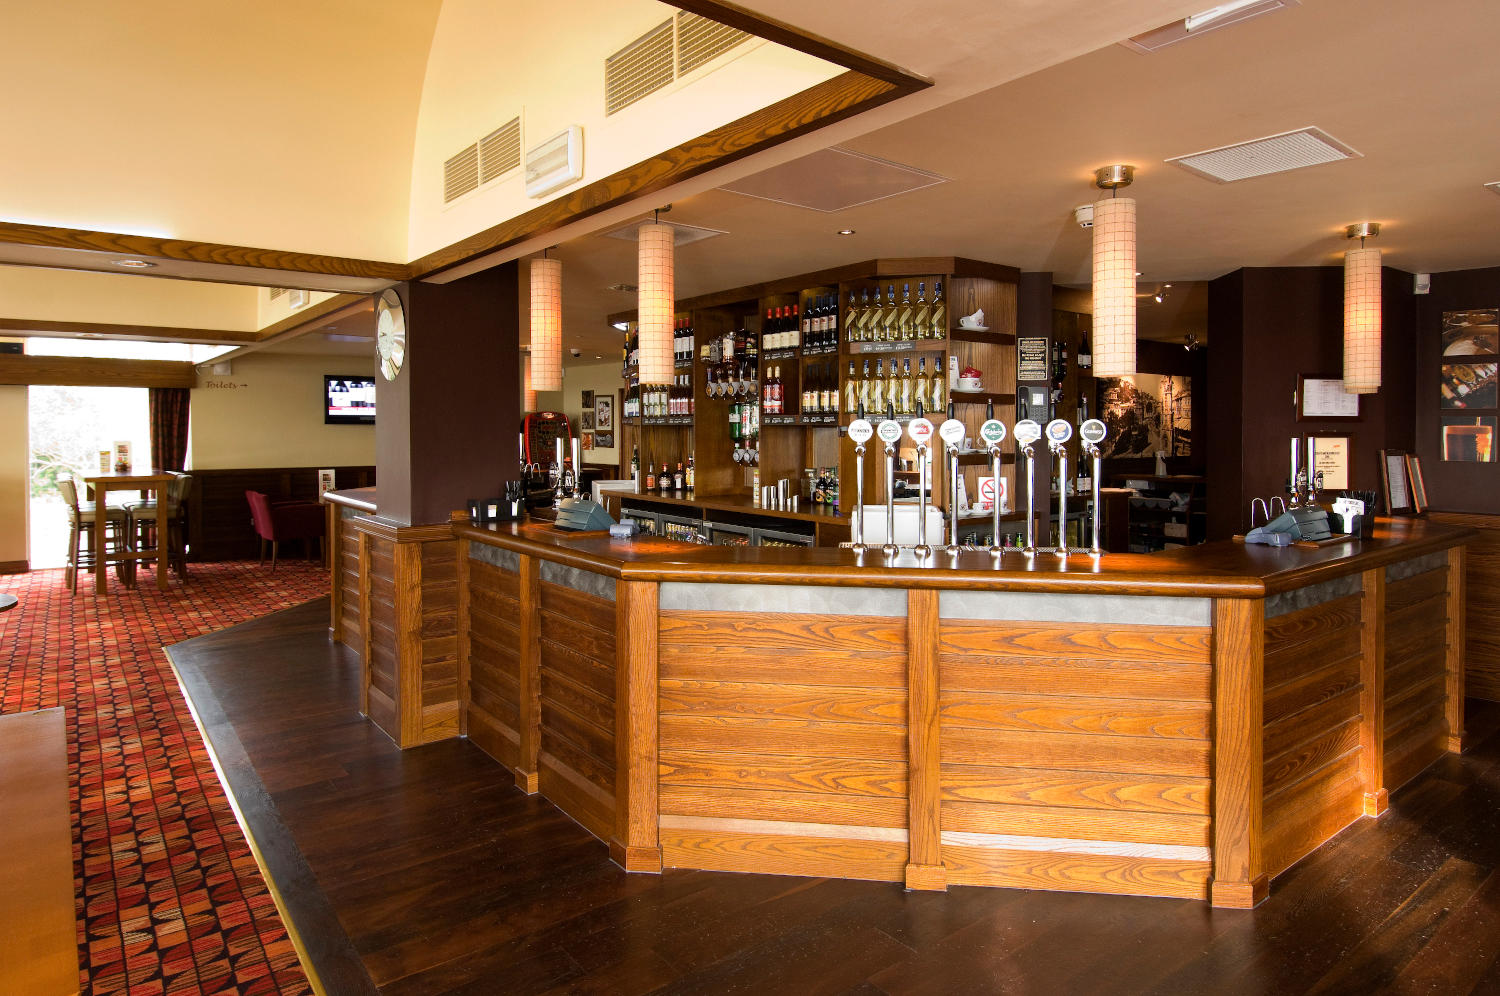 Beefeater restaurant interior Premier Inn Torquay Seafront hotel Torquay 03333 219097